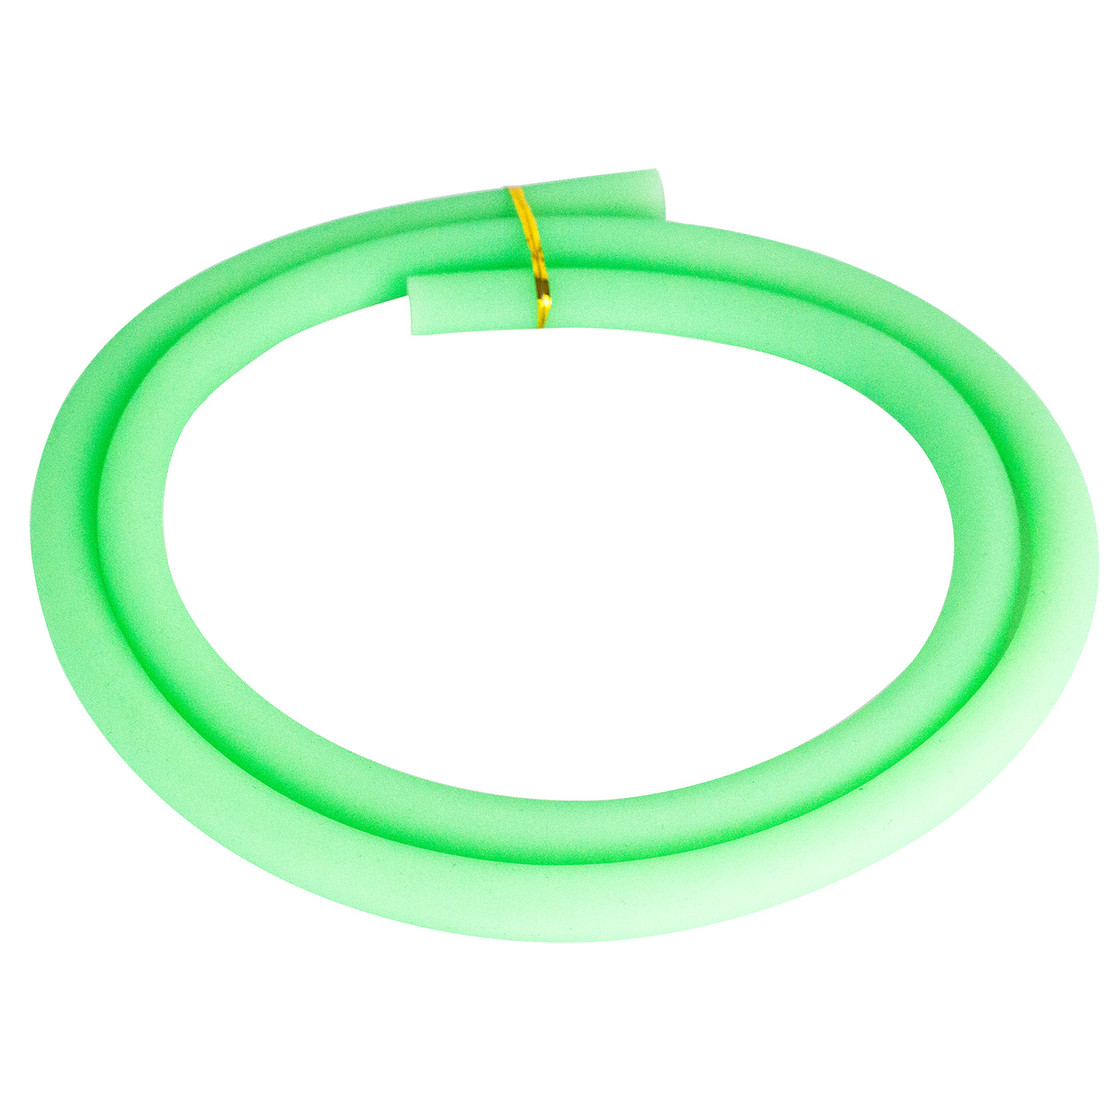 Green silicone hose